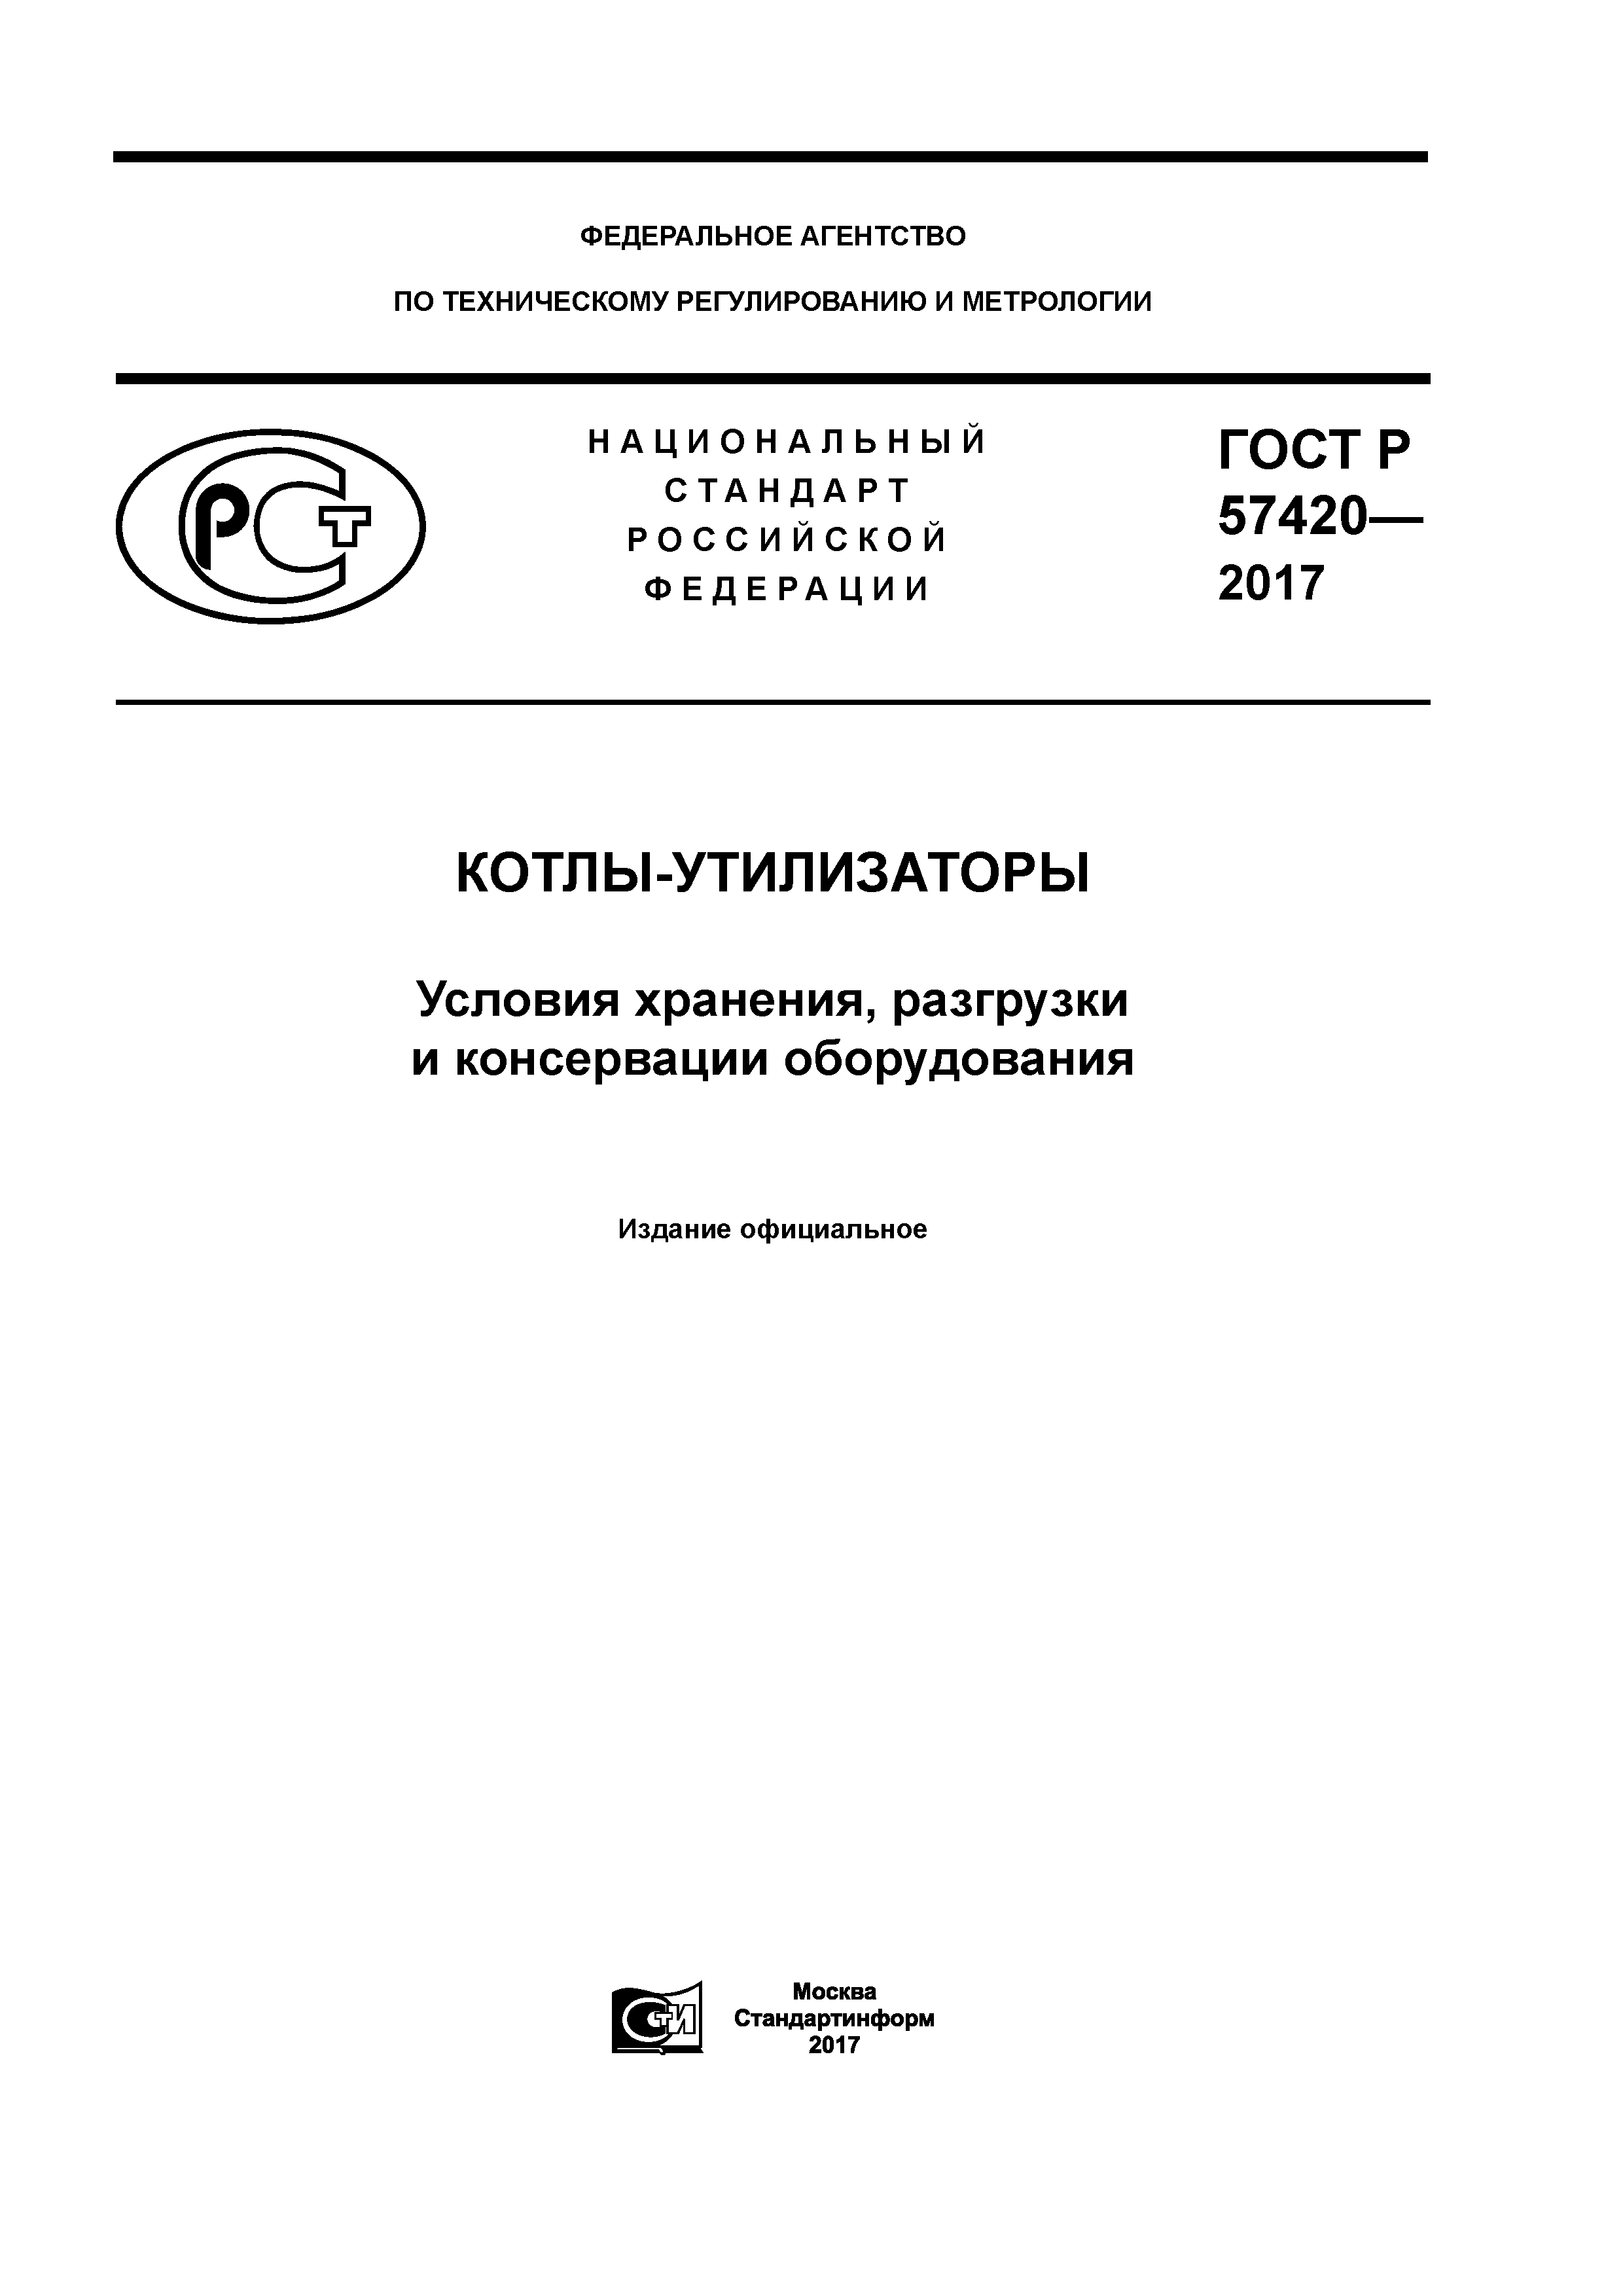 ГОСТ Р 57420-2017